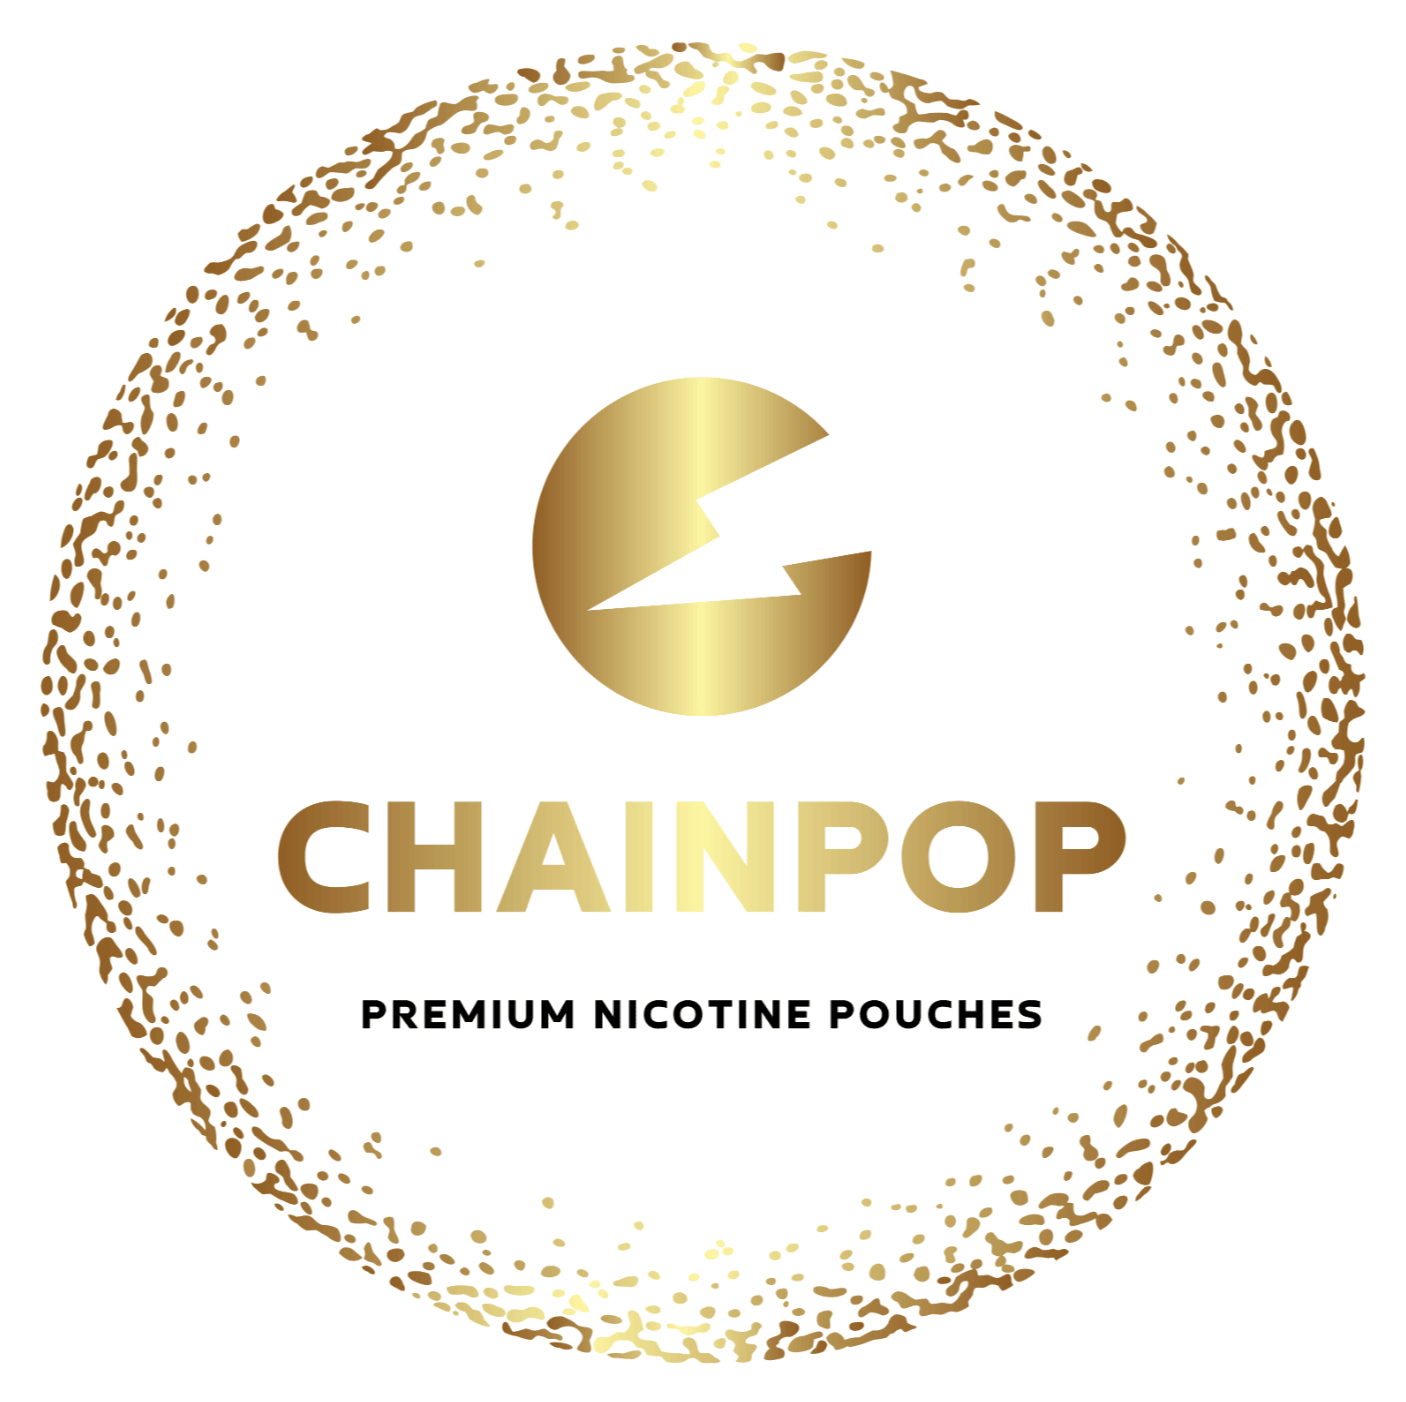 Chainpop Nikotinbeutel logo